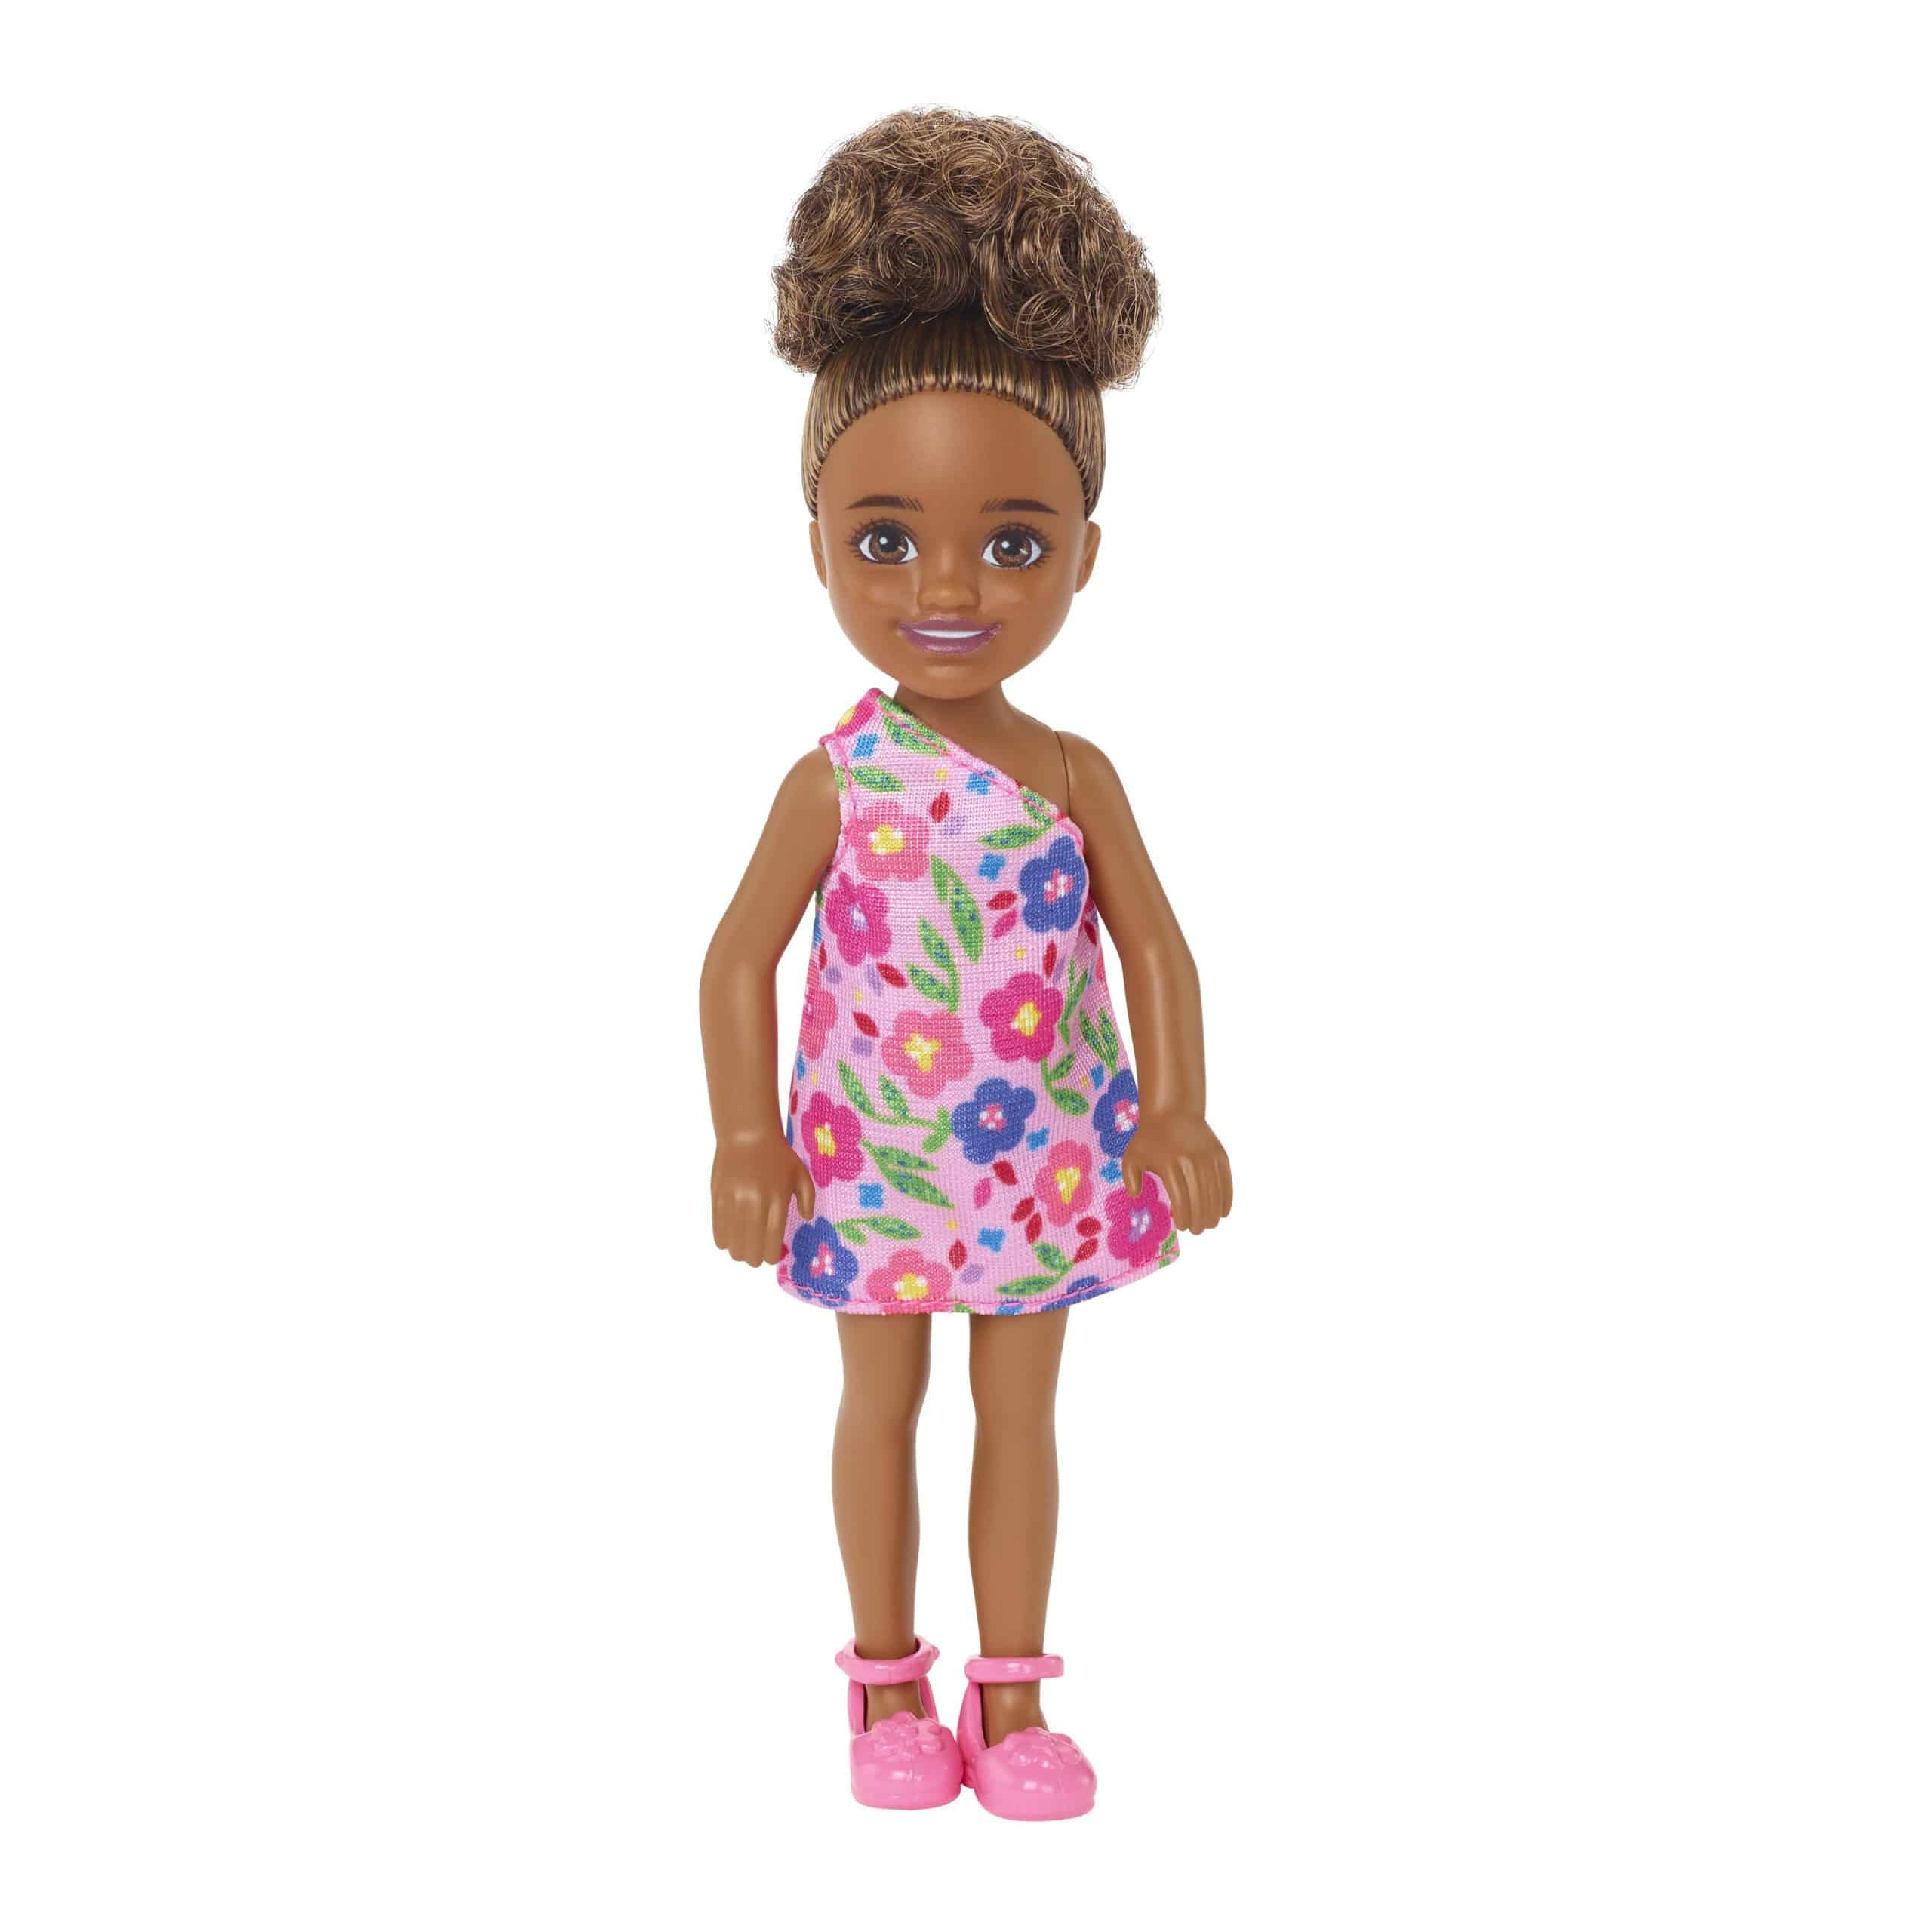 Barbie - Chelsea - Κοριτσάκι Με Φλοράλ Φόρεμα